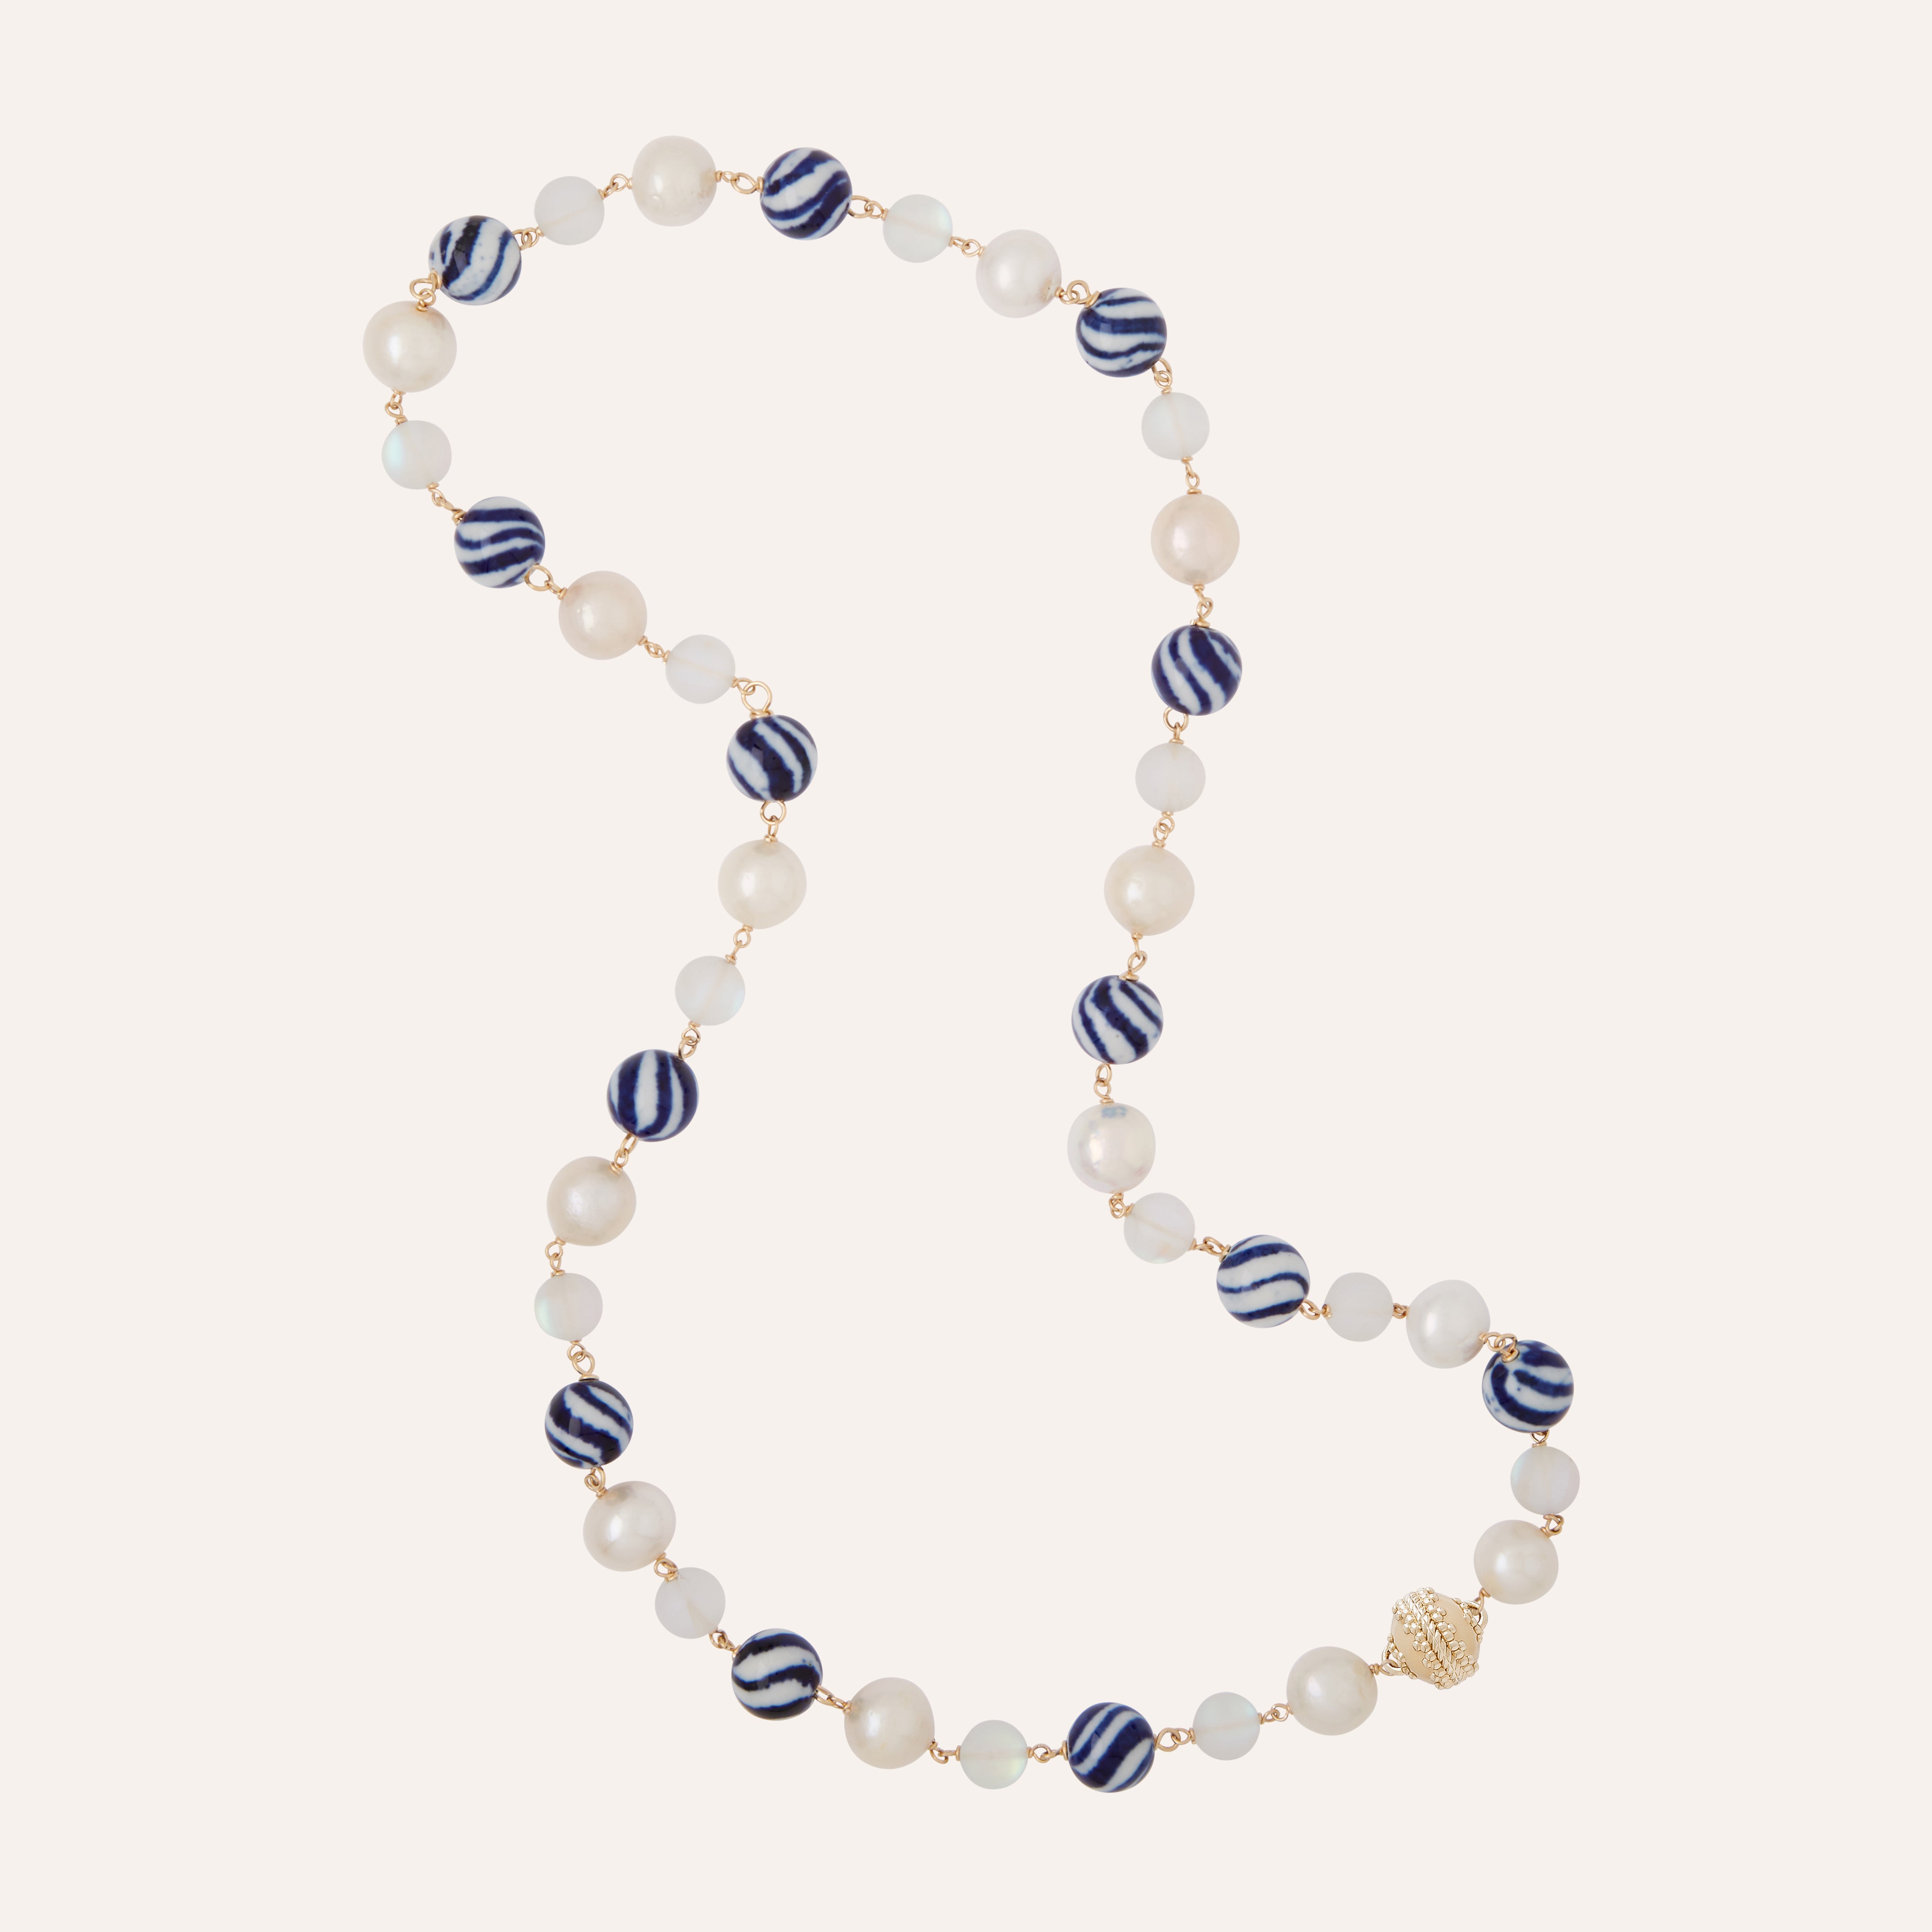 Caspian Potato Pearl, Cosmic White Glass, & Porcelain Swirl Necklace